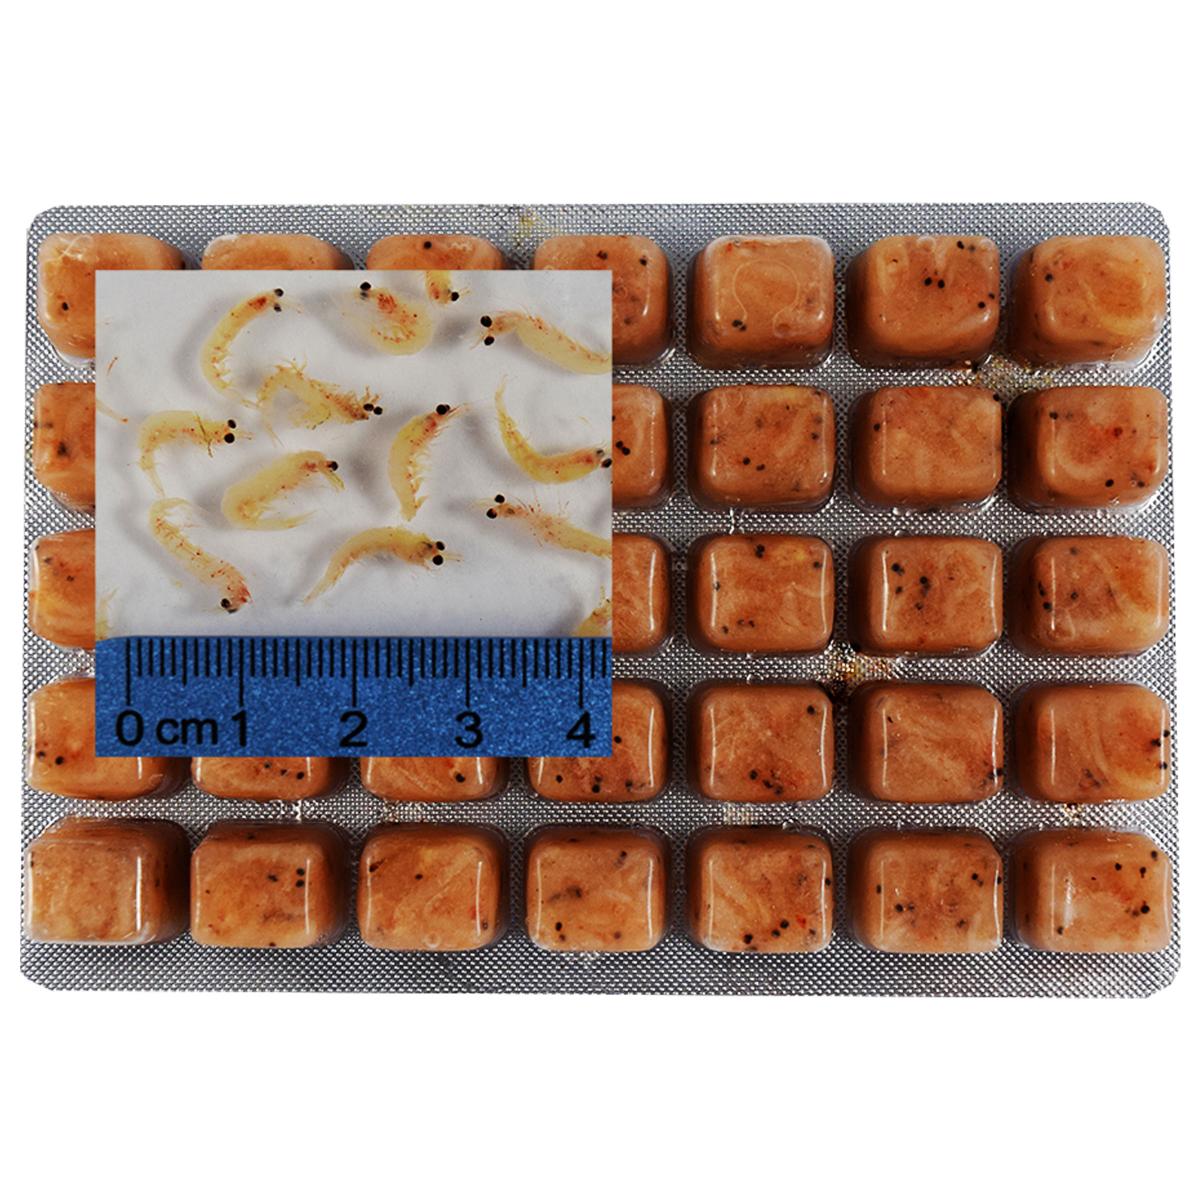 Frozen Brine Shrimp 3.5 oz Cube Trays - Box of 7 trays (1.54 lbs)